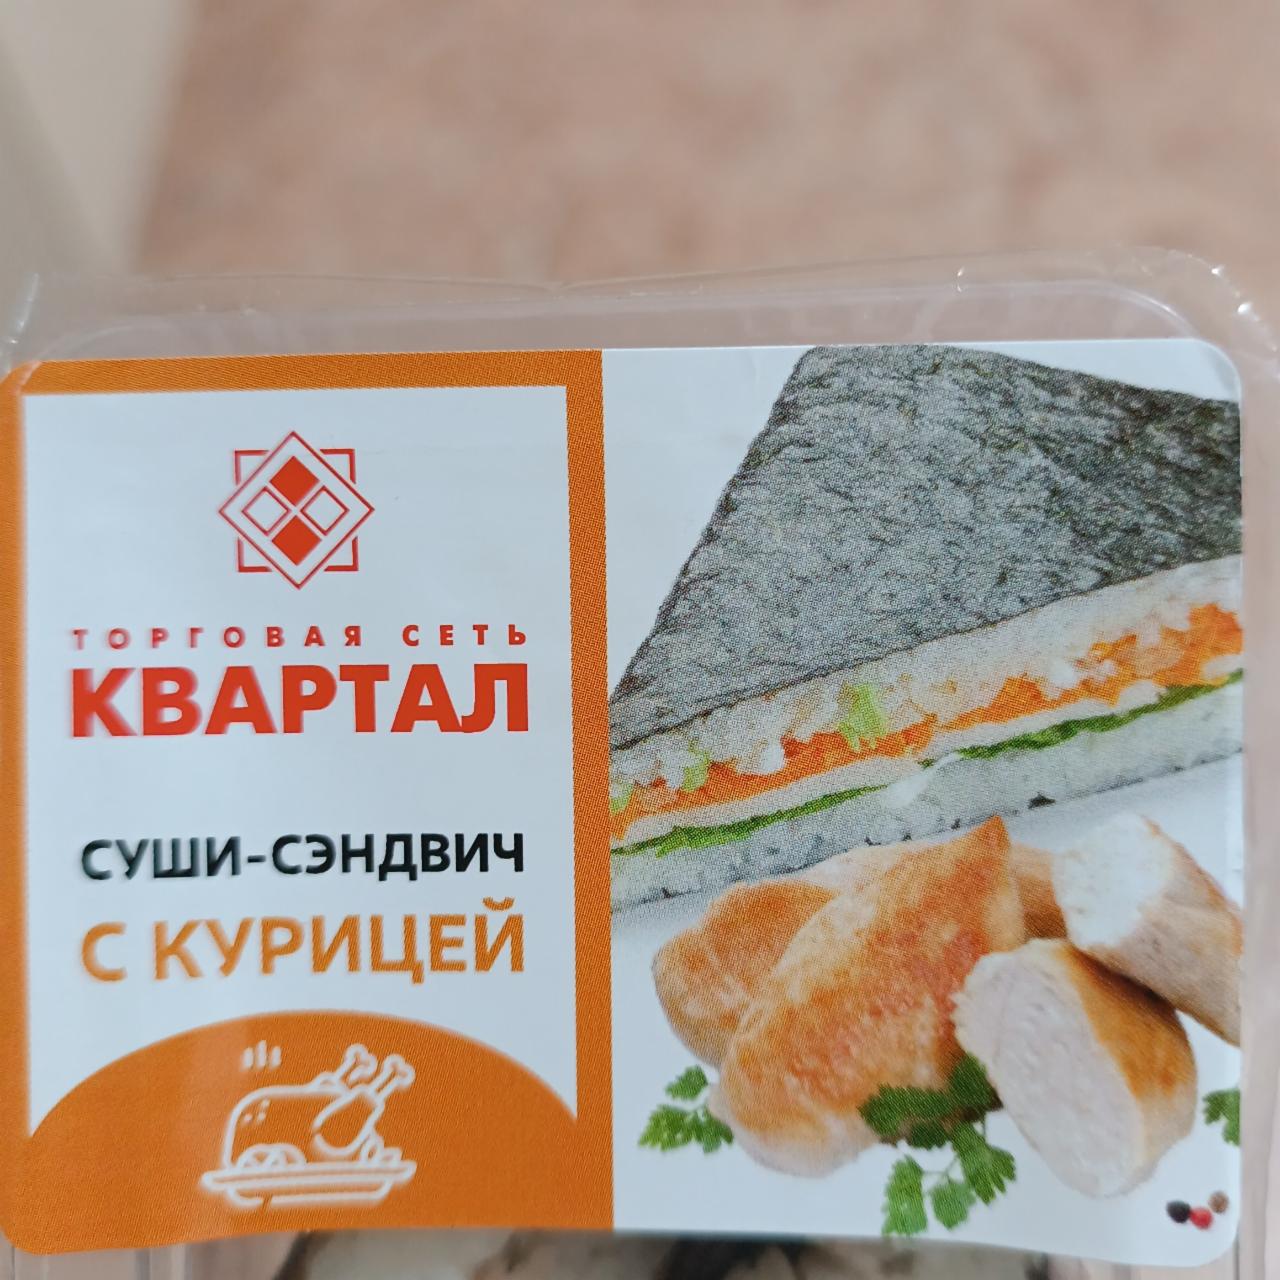 Фото - суши сэндвич с курицей Квартал